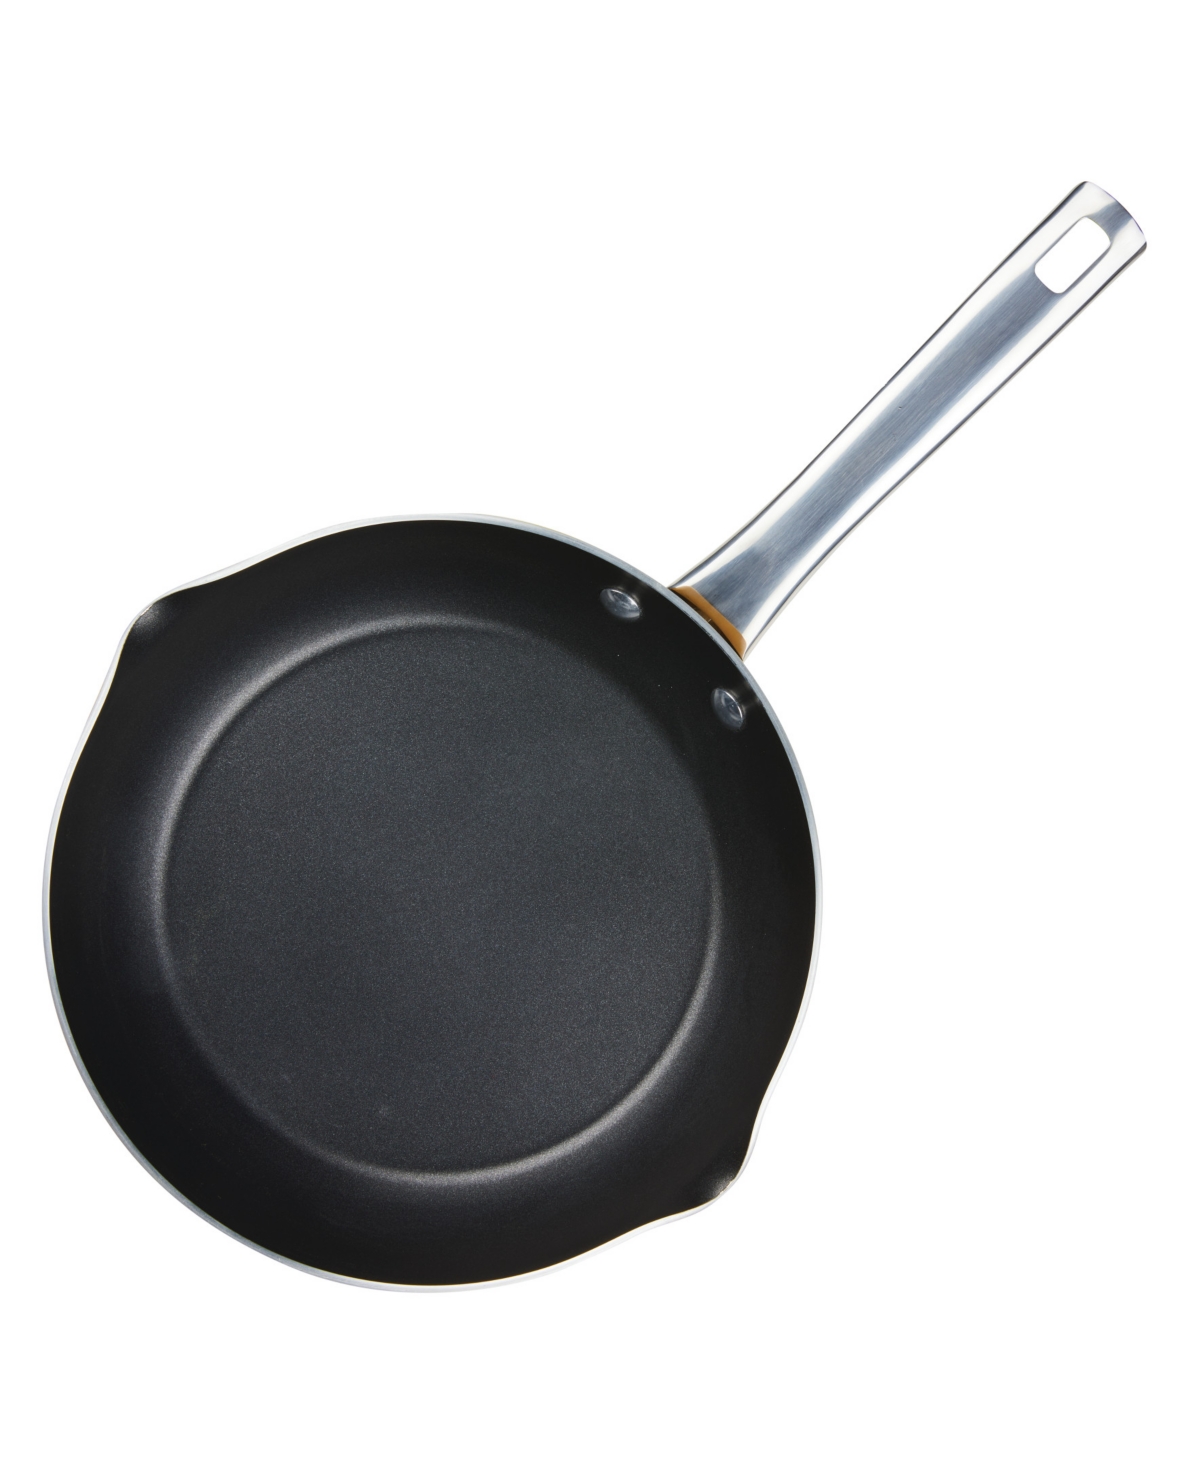 Shop Farberware Style Aluminum Nonstick 10" Cookware Frying Pan In Yellow